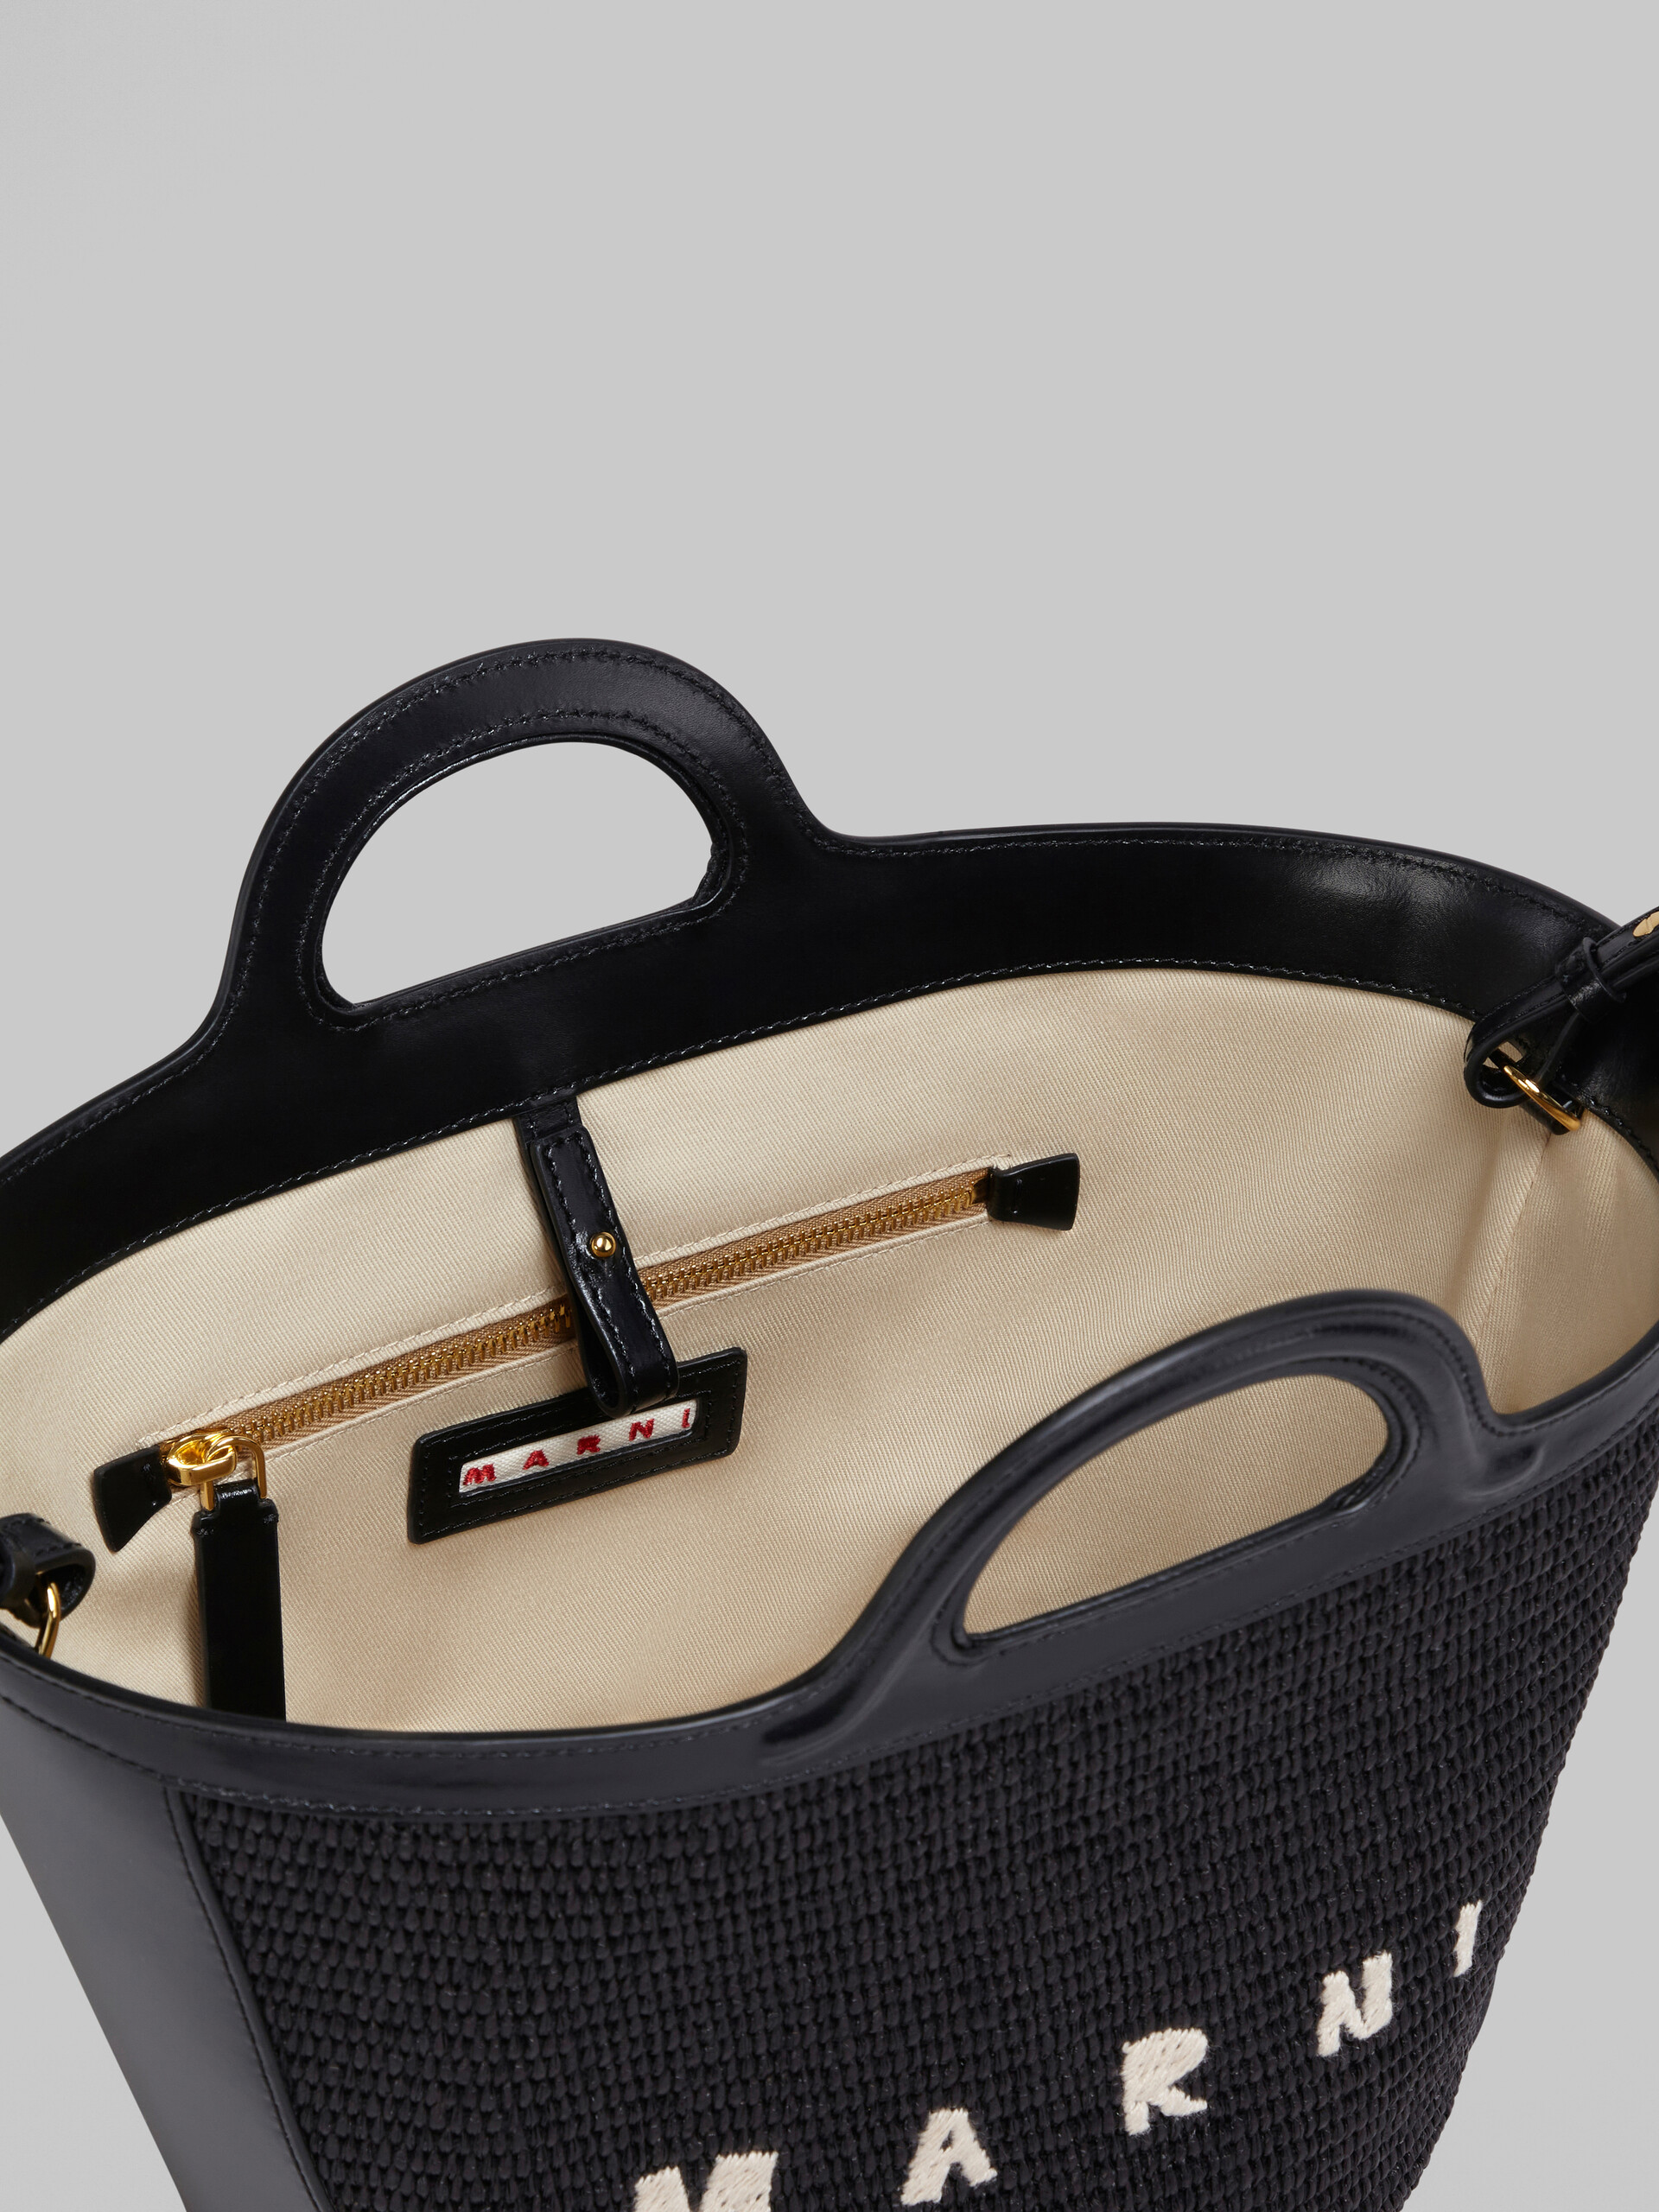 TROPICALIA small bag in black leather and raffia - Handbag - Image 4